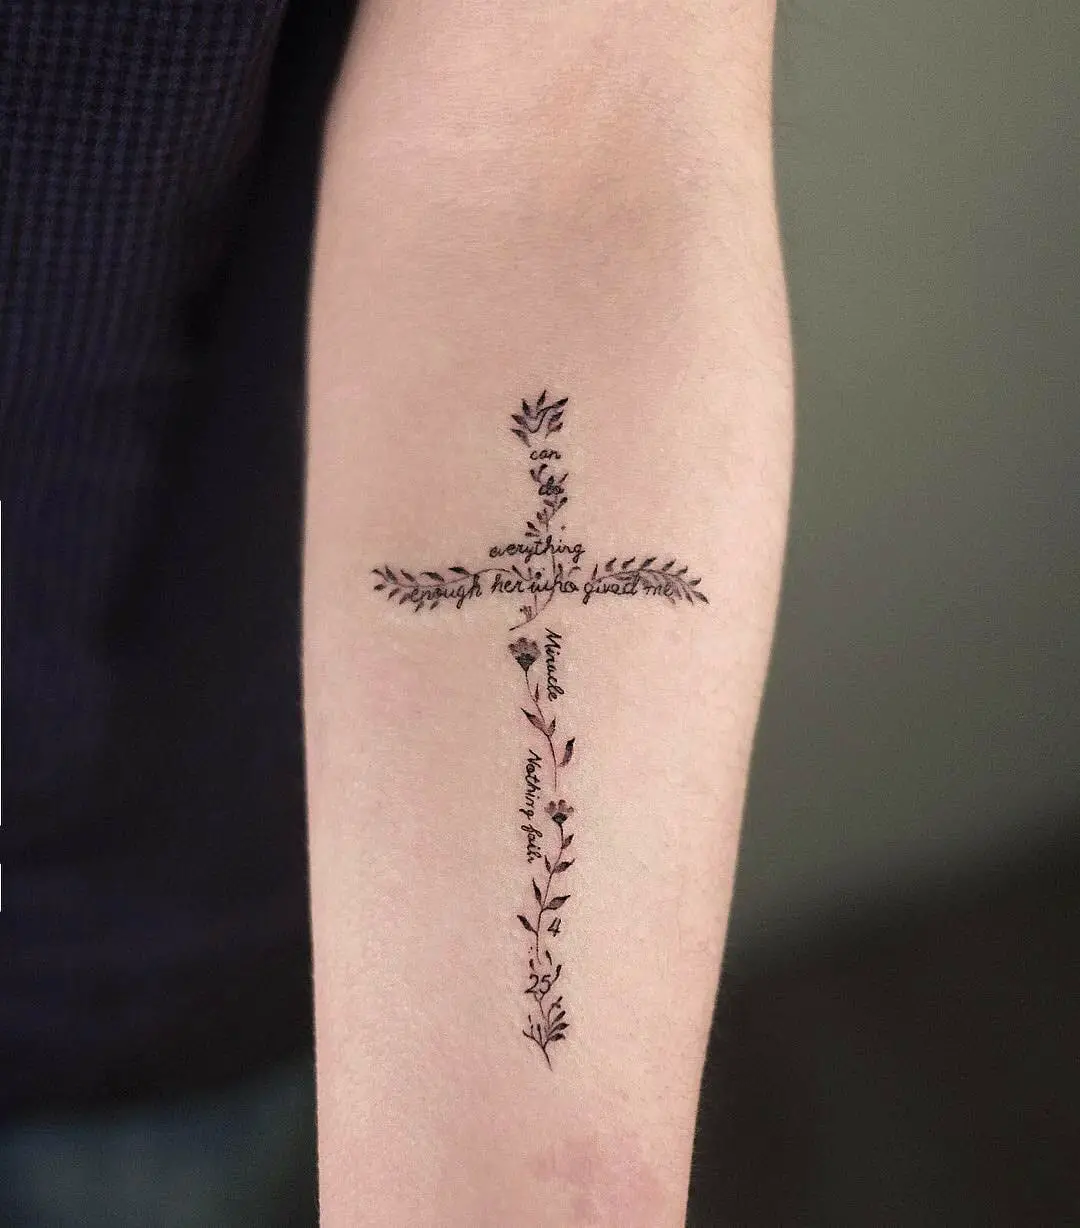 40 Small Cross Tattoo Designs That You Will Love - Psycho Tats